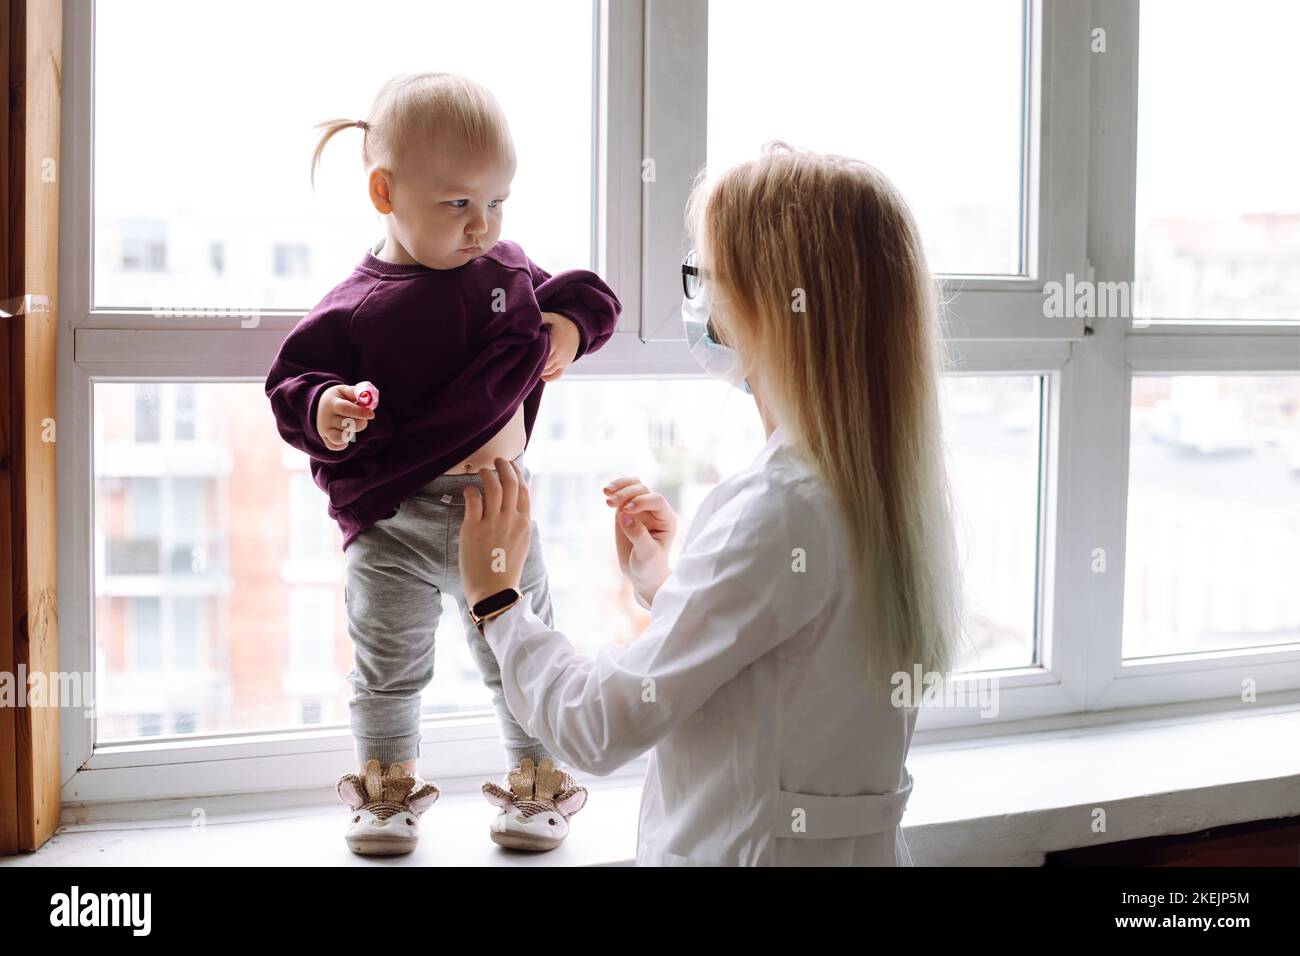 Worried little girl standing on windowsill, raising sweatshirt to show belly to childrens doctor wearing white uniform. Stock Photo